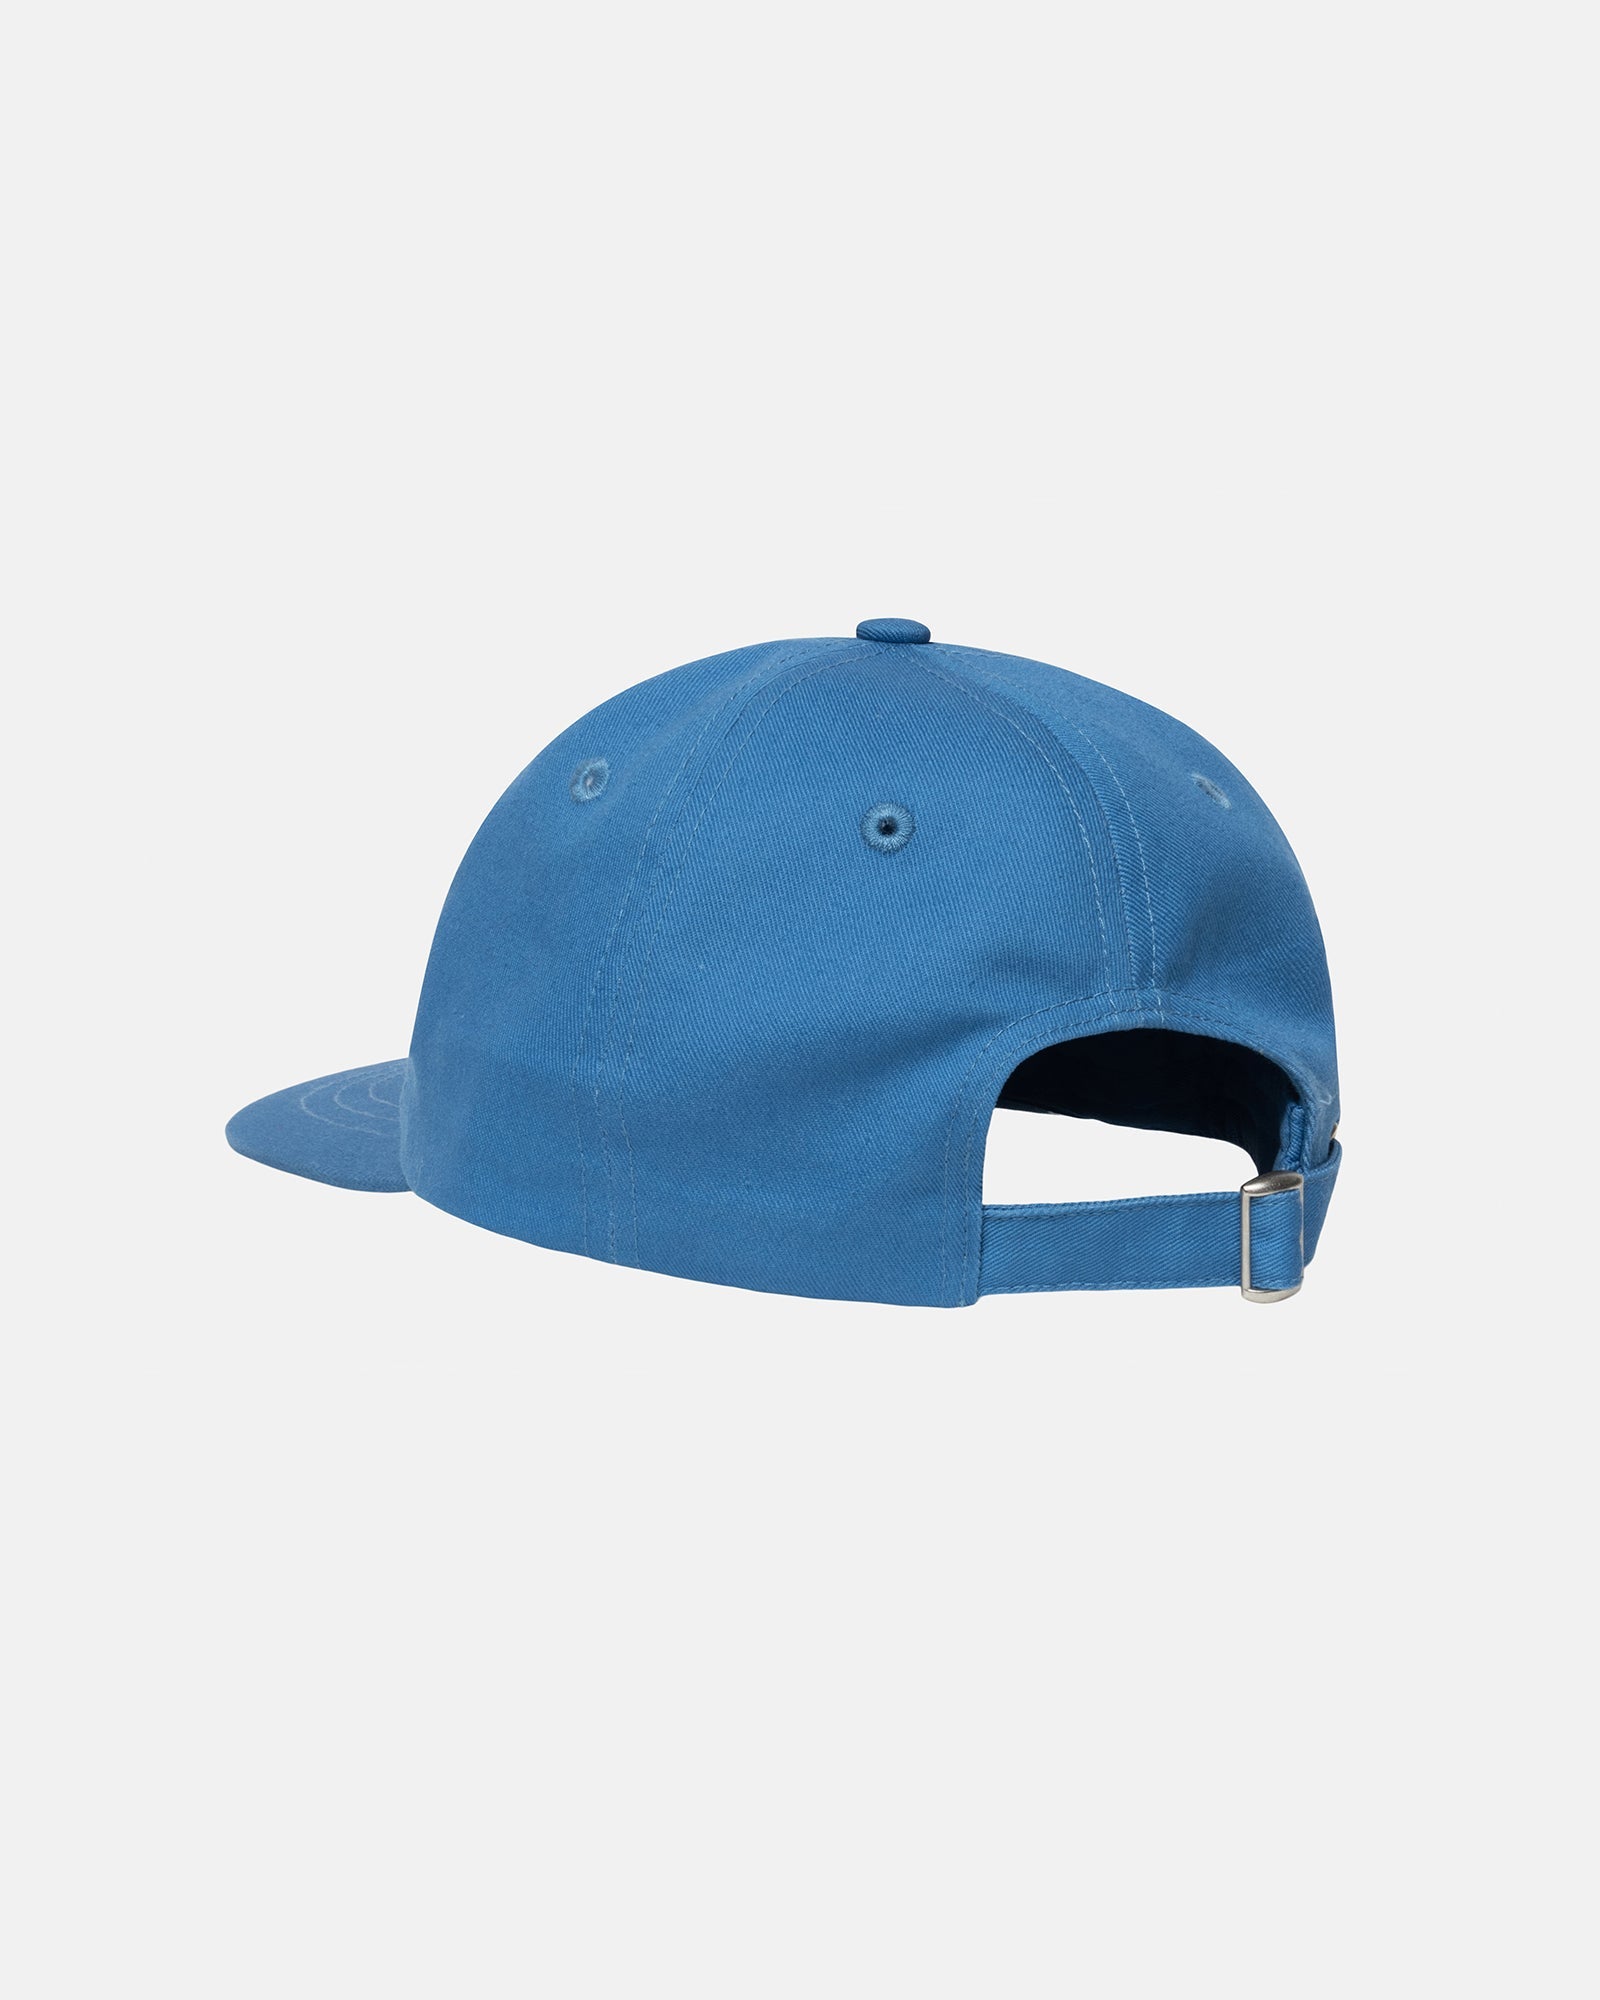 Stüssy Low Pro Basic Strapback Haze Blue Headwear